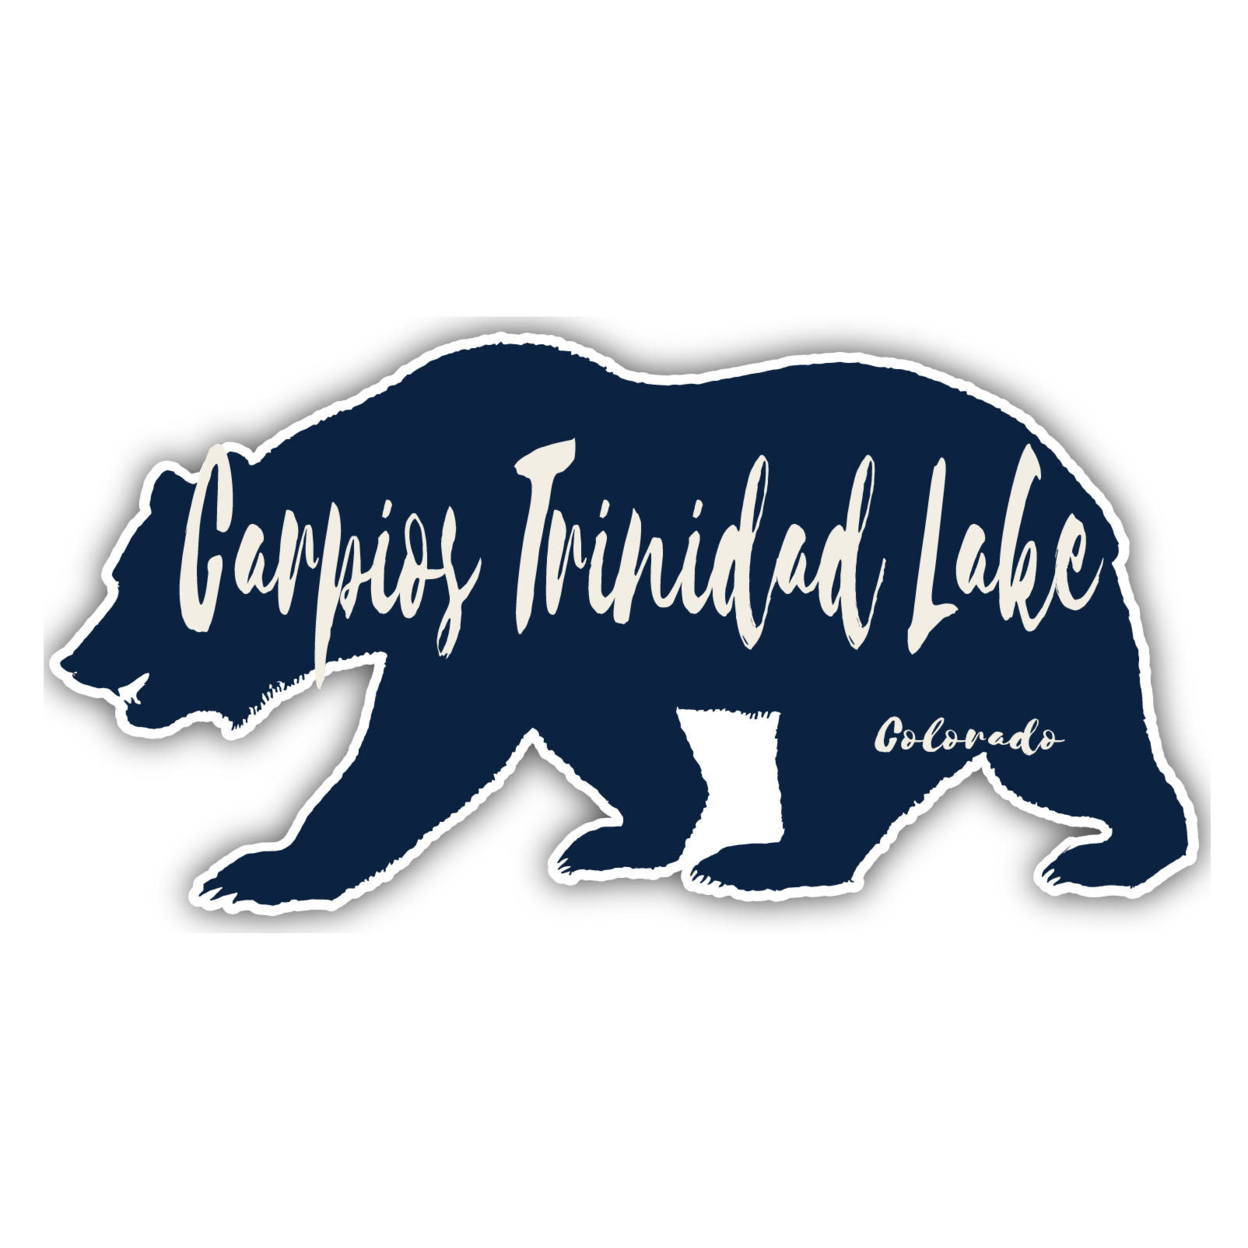 Carpios Trinidad Lake Colorado Souvenir Decorative Stickers (Choose Theme And Size) - Single Unit, 12-Inch, Bear